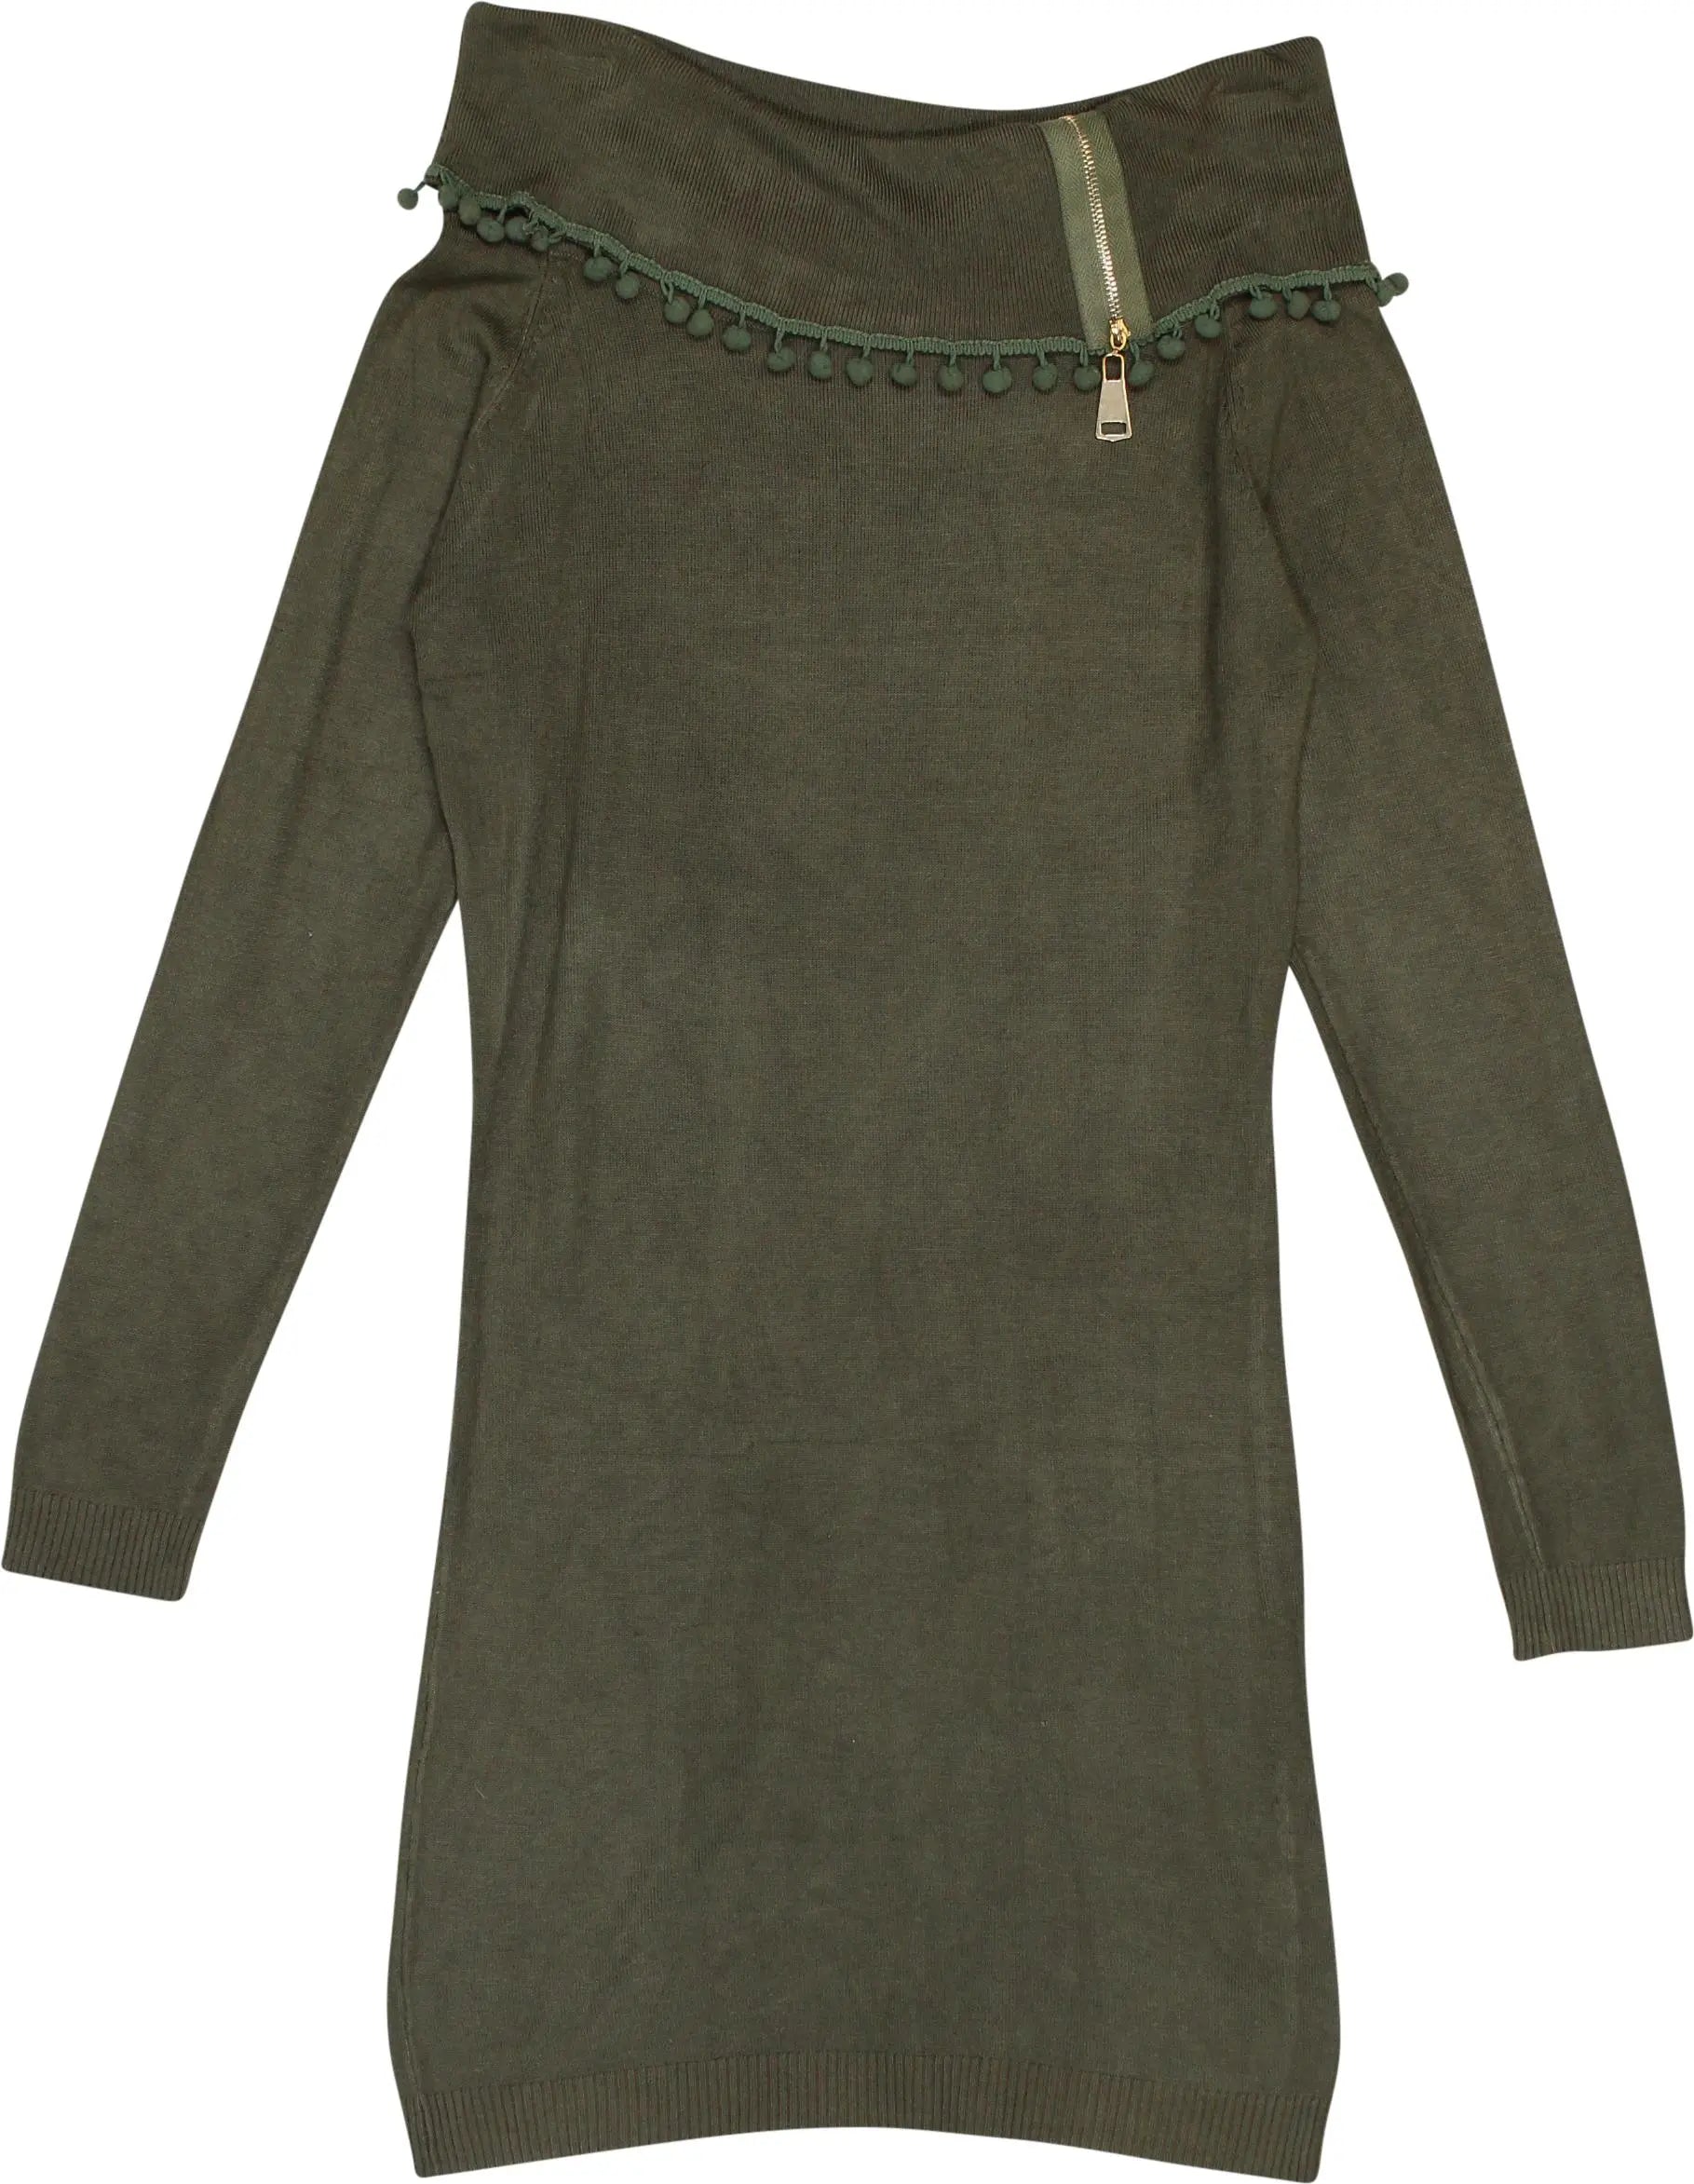 Laetitia Mem - Green Dress- ThriftTale.com - Vintage and second handclothing